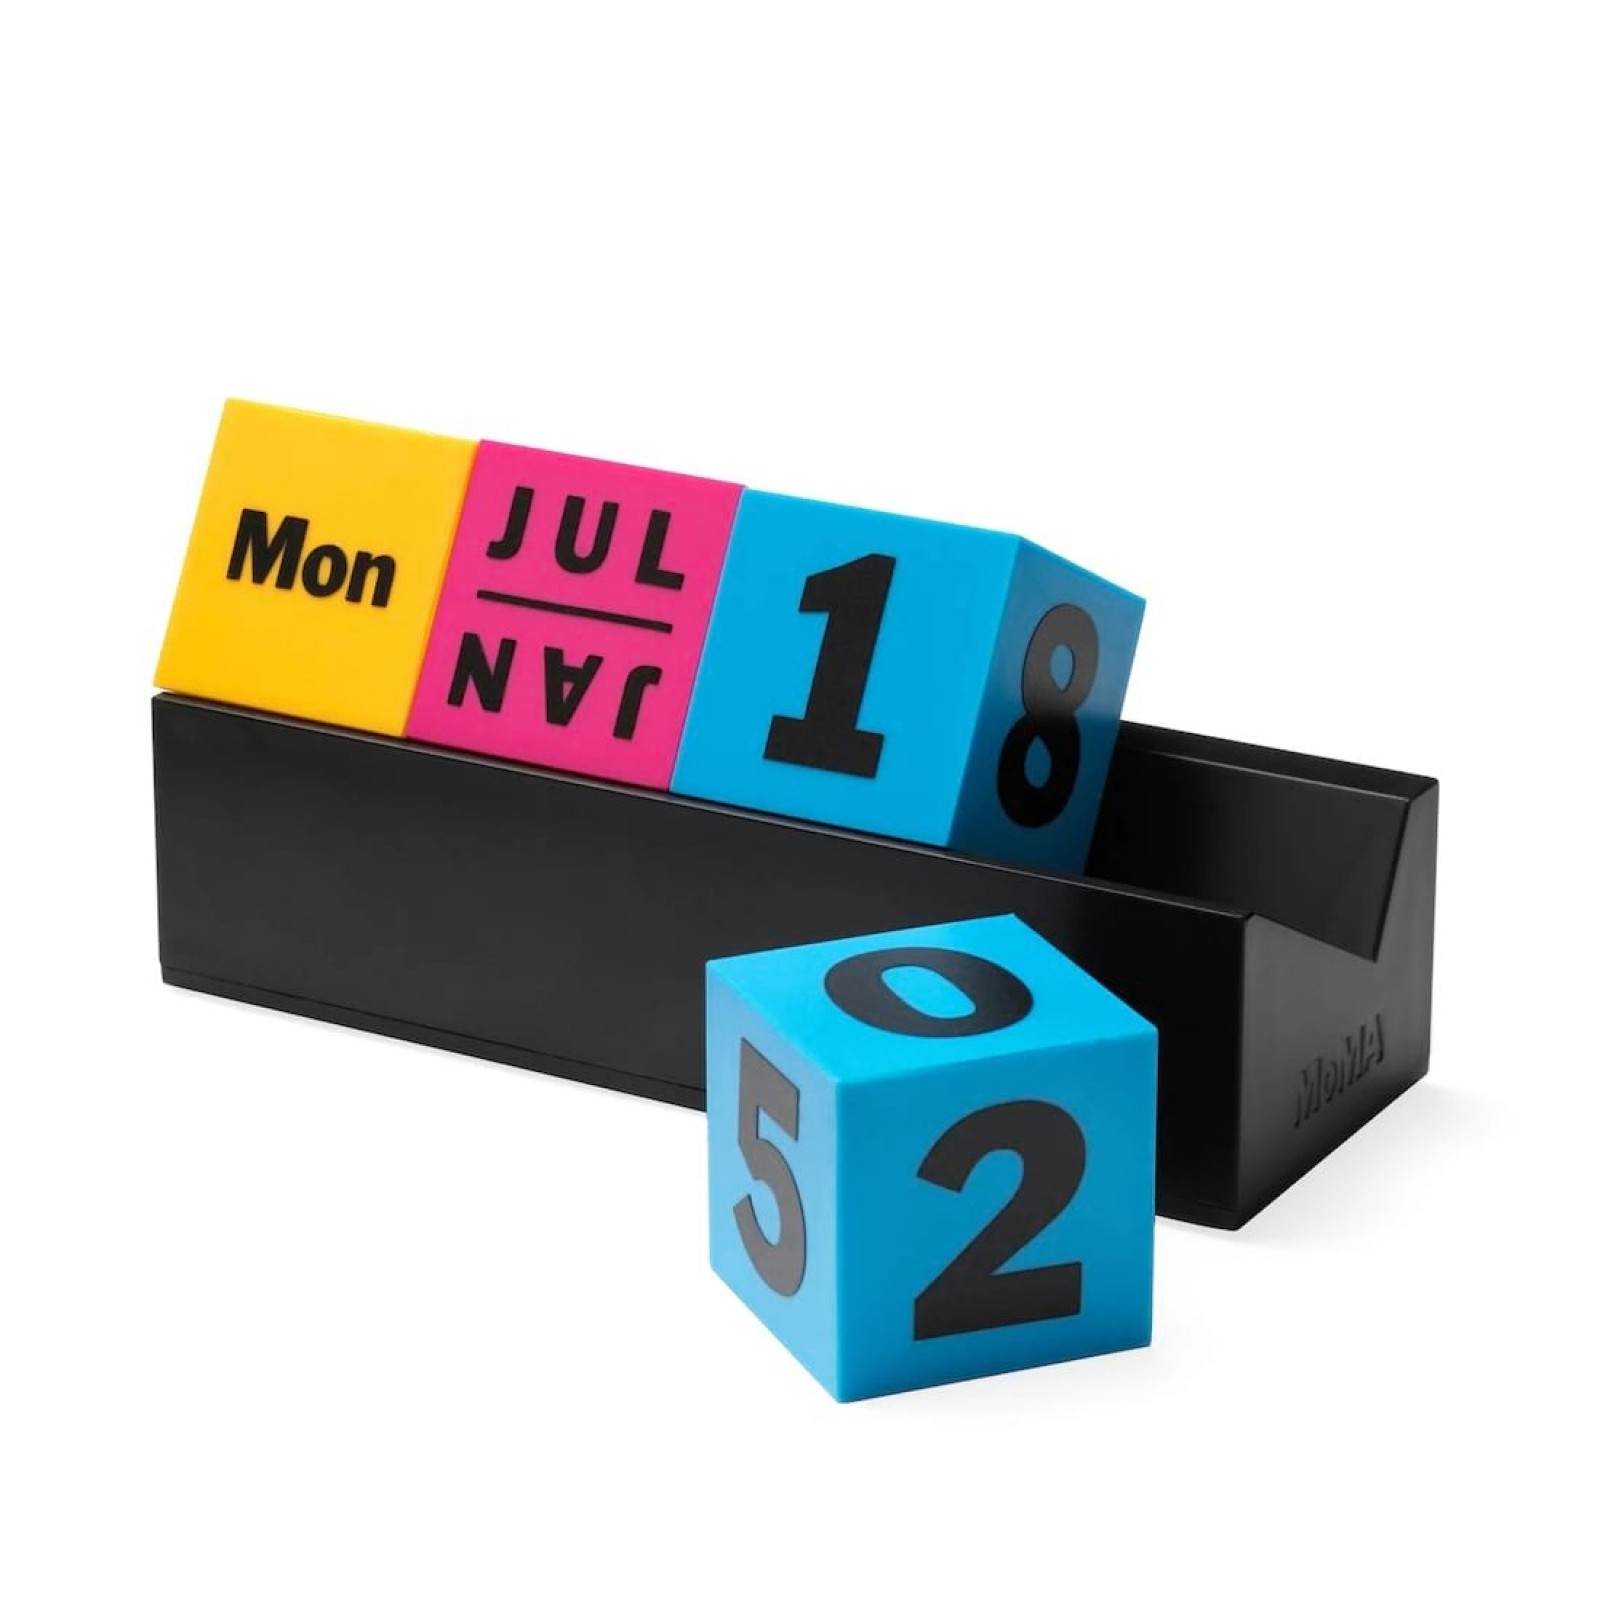 Cubes Perpetual Calendar (Multicolor) - MoMa